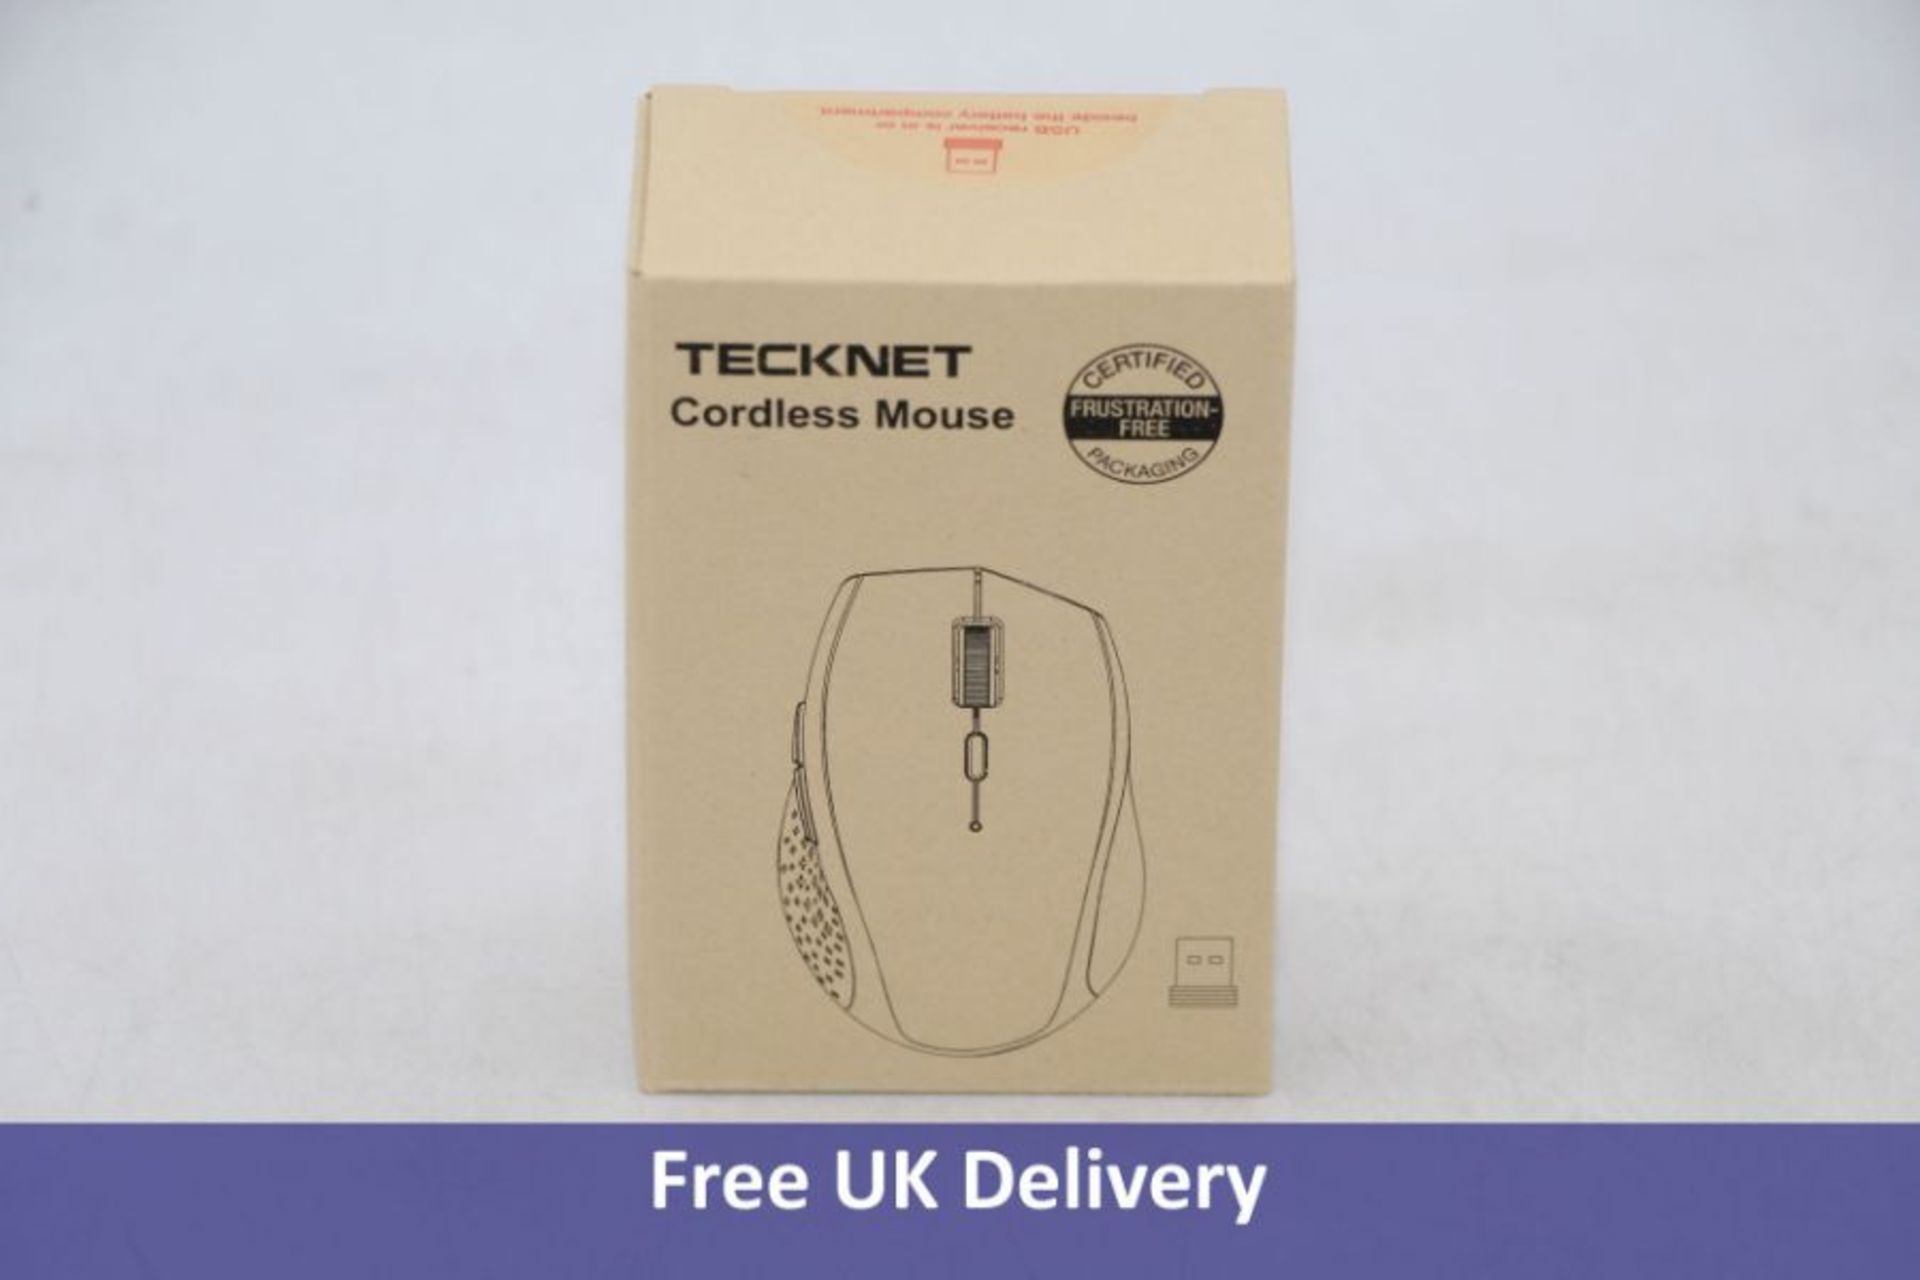 Twenty Tecknet Cordless Mouse, Black, V4, B00ECZFDR4